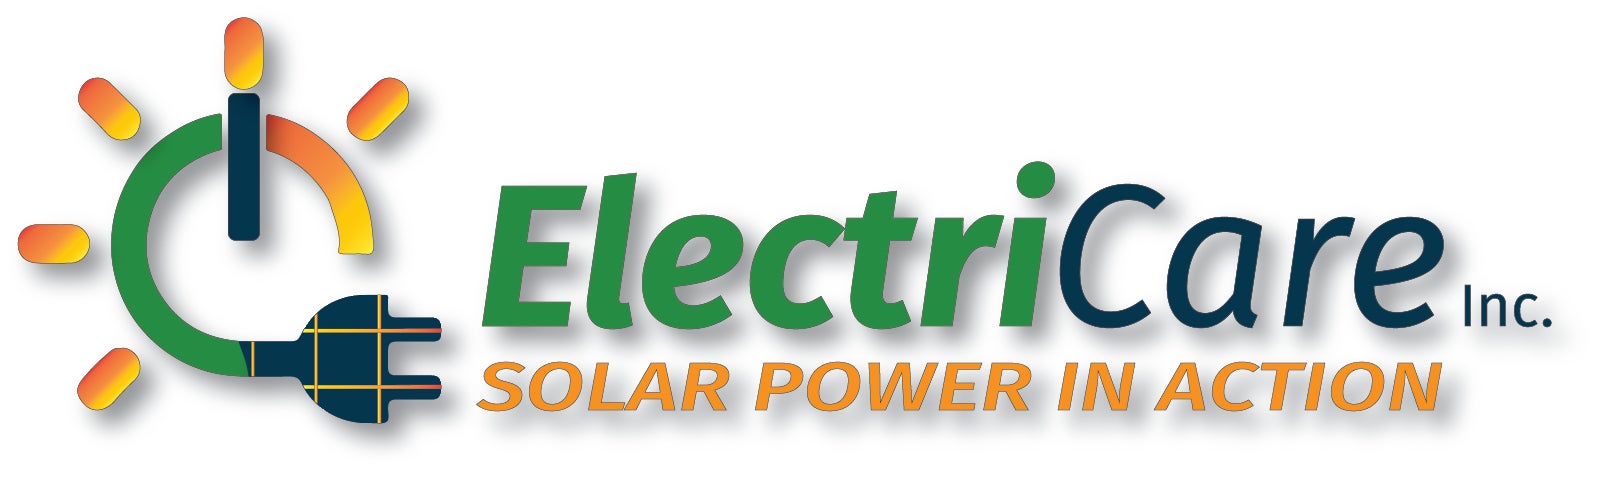 ElectriCare, Inc. logo